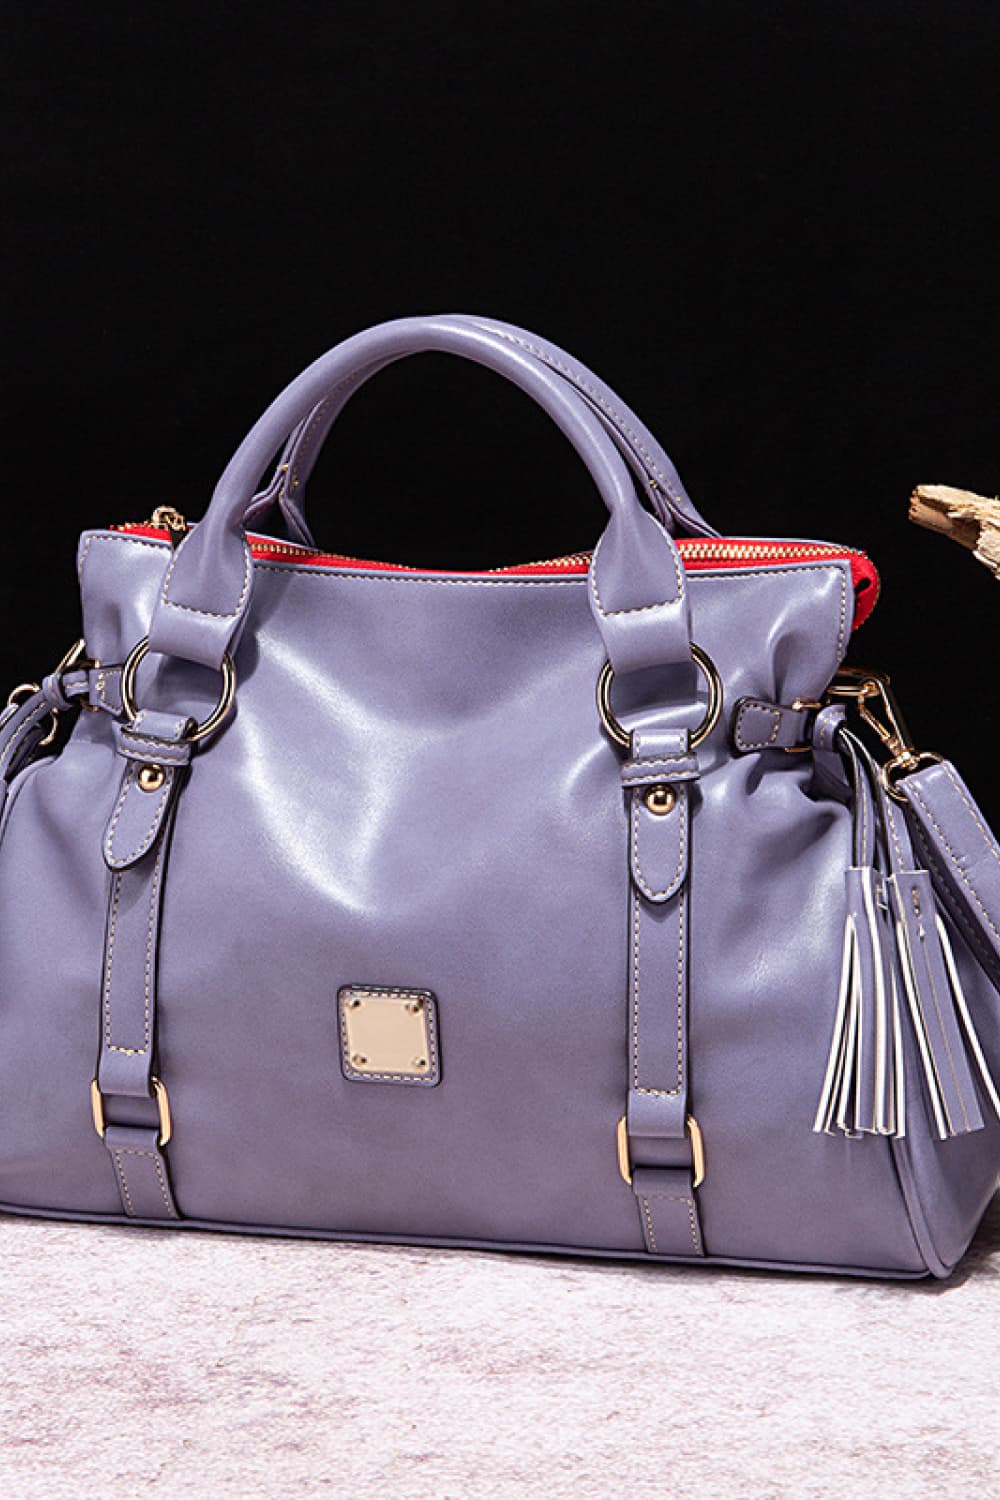 PU Leather Handbag with Tassels BLUE ZONE PLANET